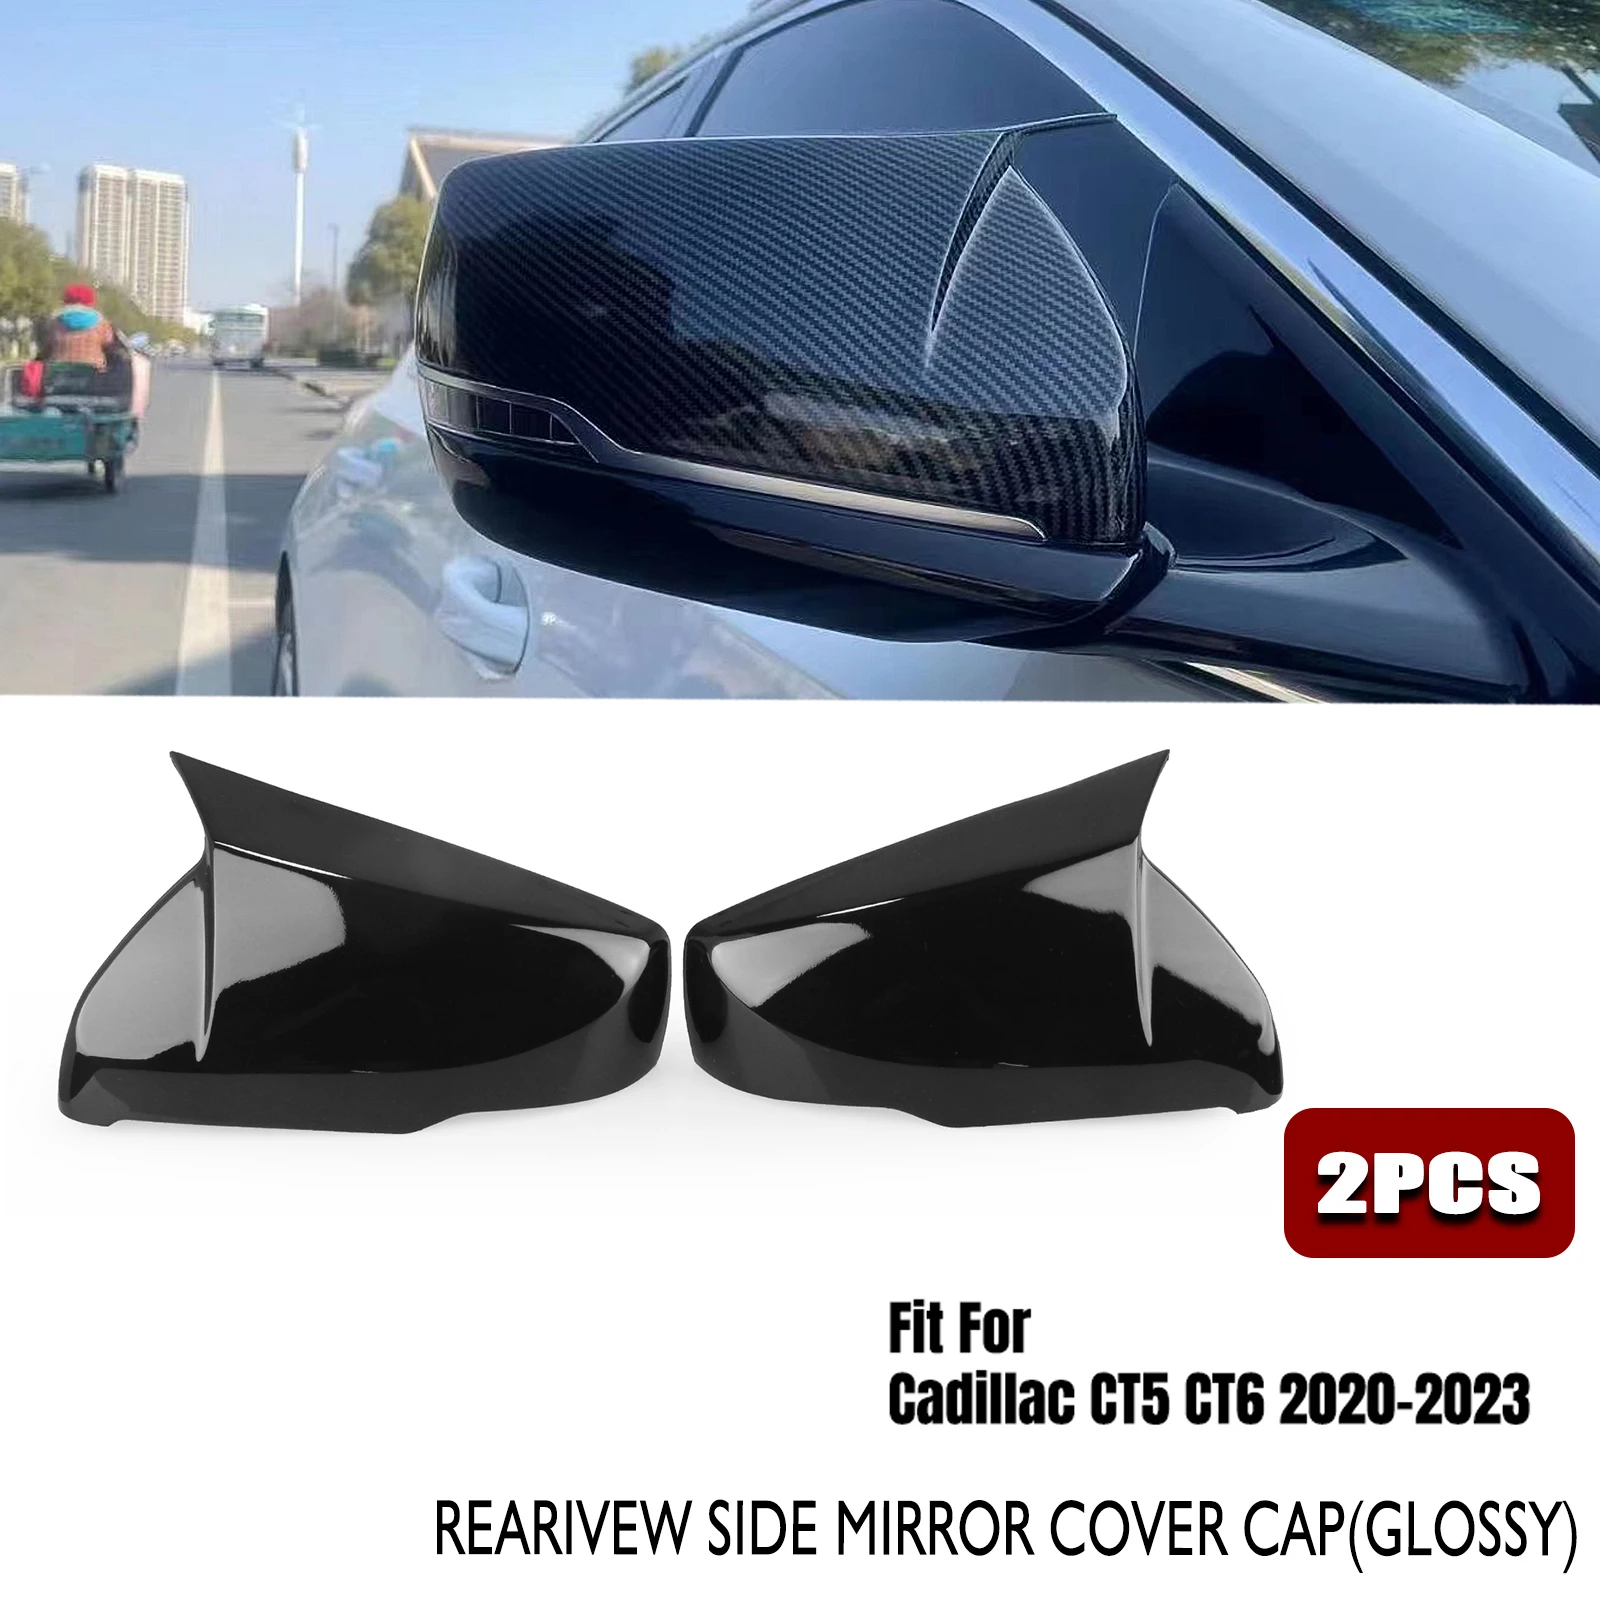 

Rear View Mirror Cover For Cadillac CT5 CT6 2019-2024 Sedan Replacement Carbon Fiber Look/Gloss Black Car Rearview Cap